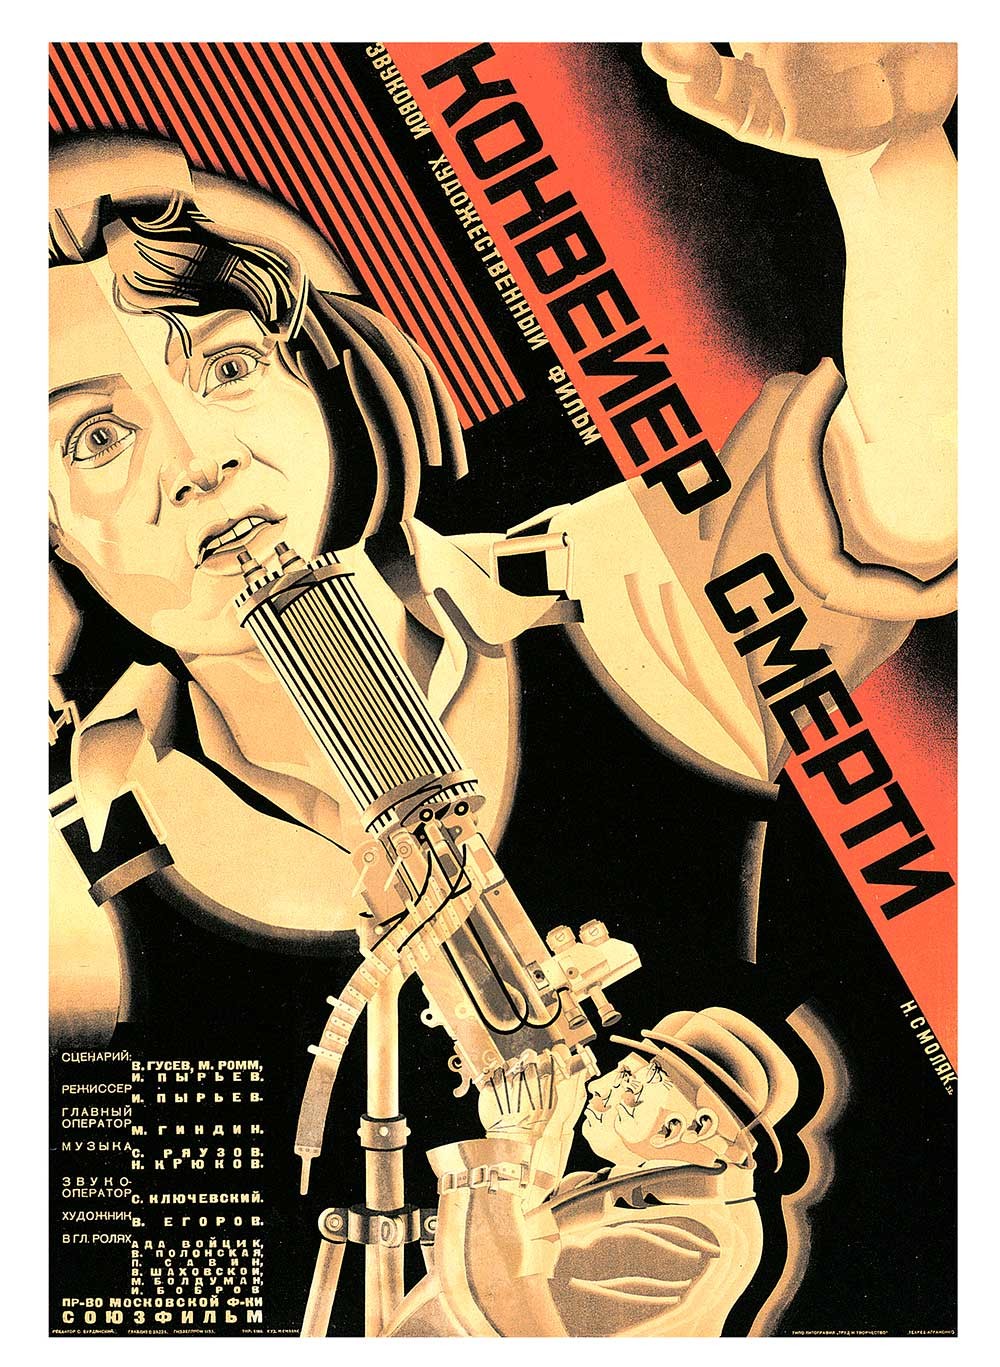 Smolyakovsky, Film poster for Konveier smerti (The Conveyor of Death), 1933